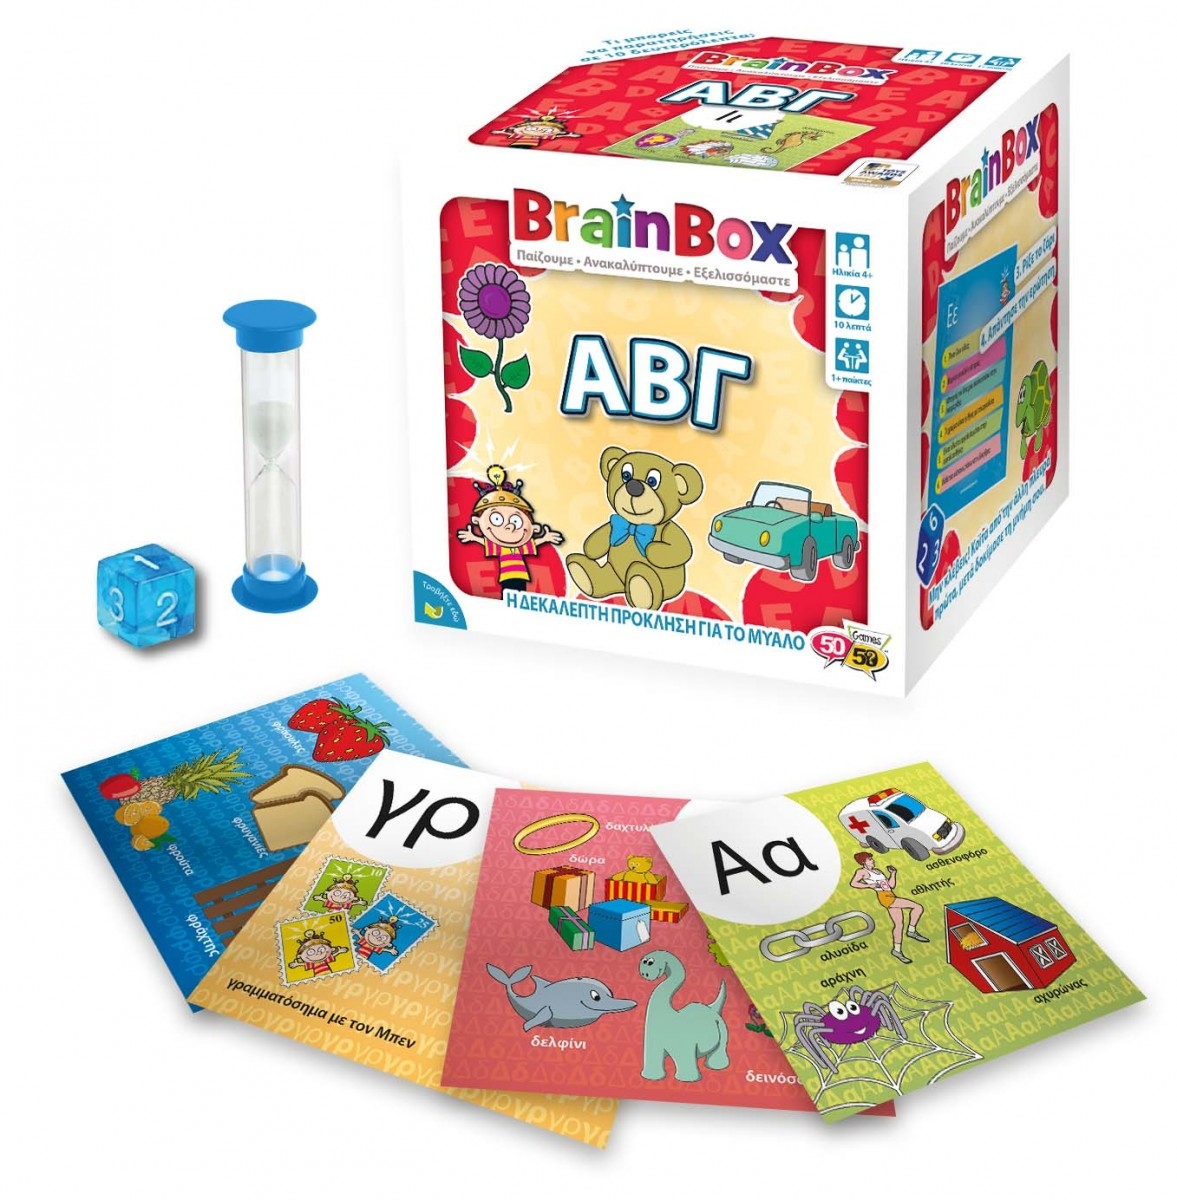 BrainBox - ΑΒΓ